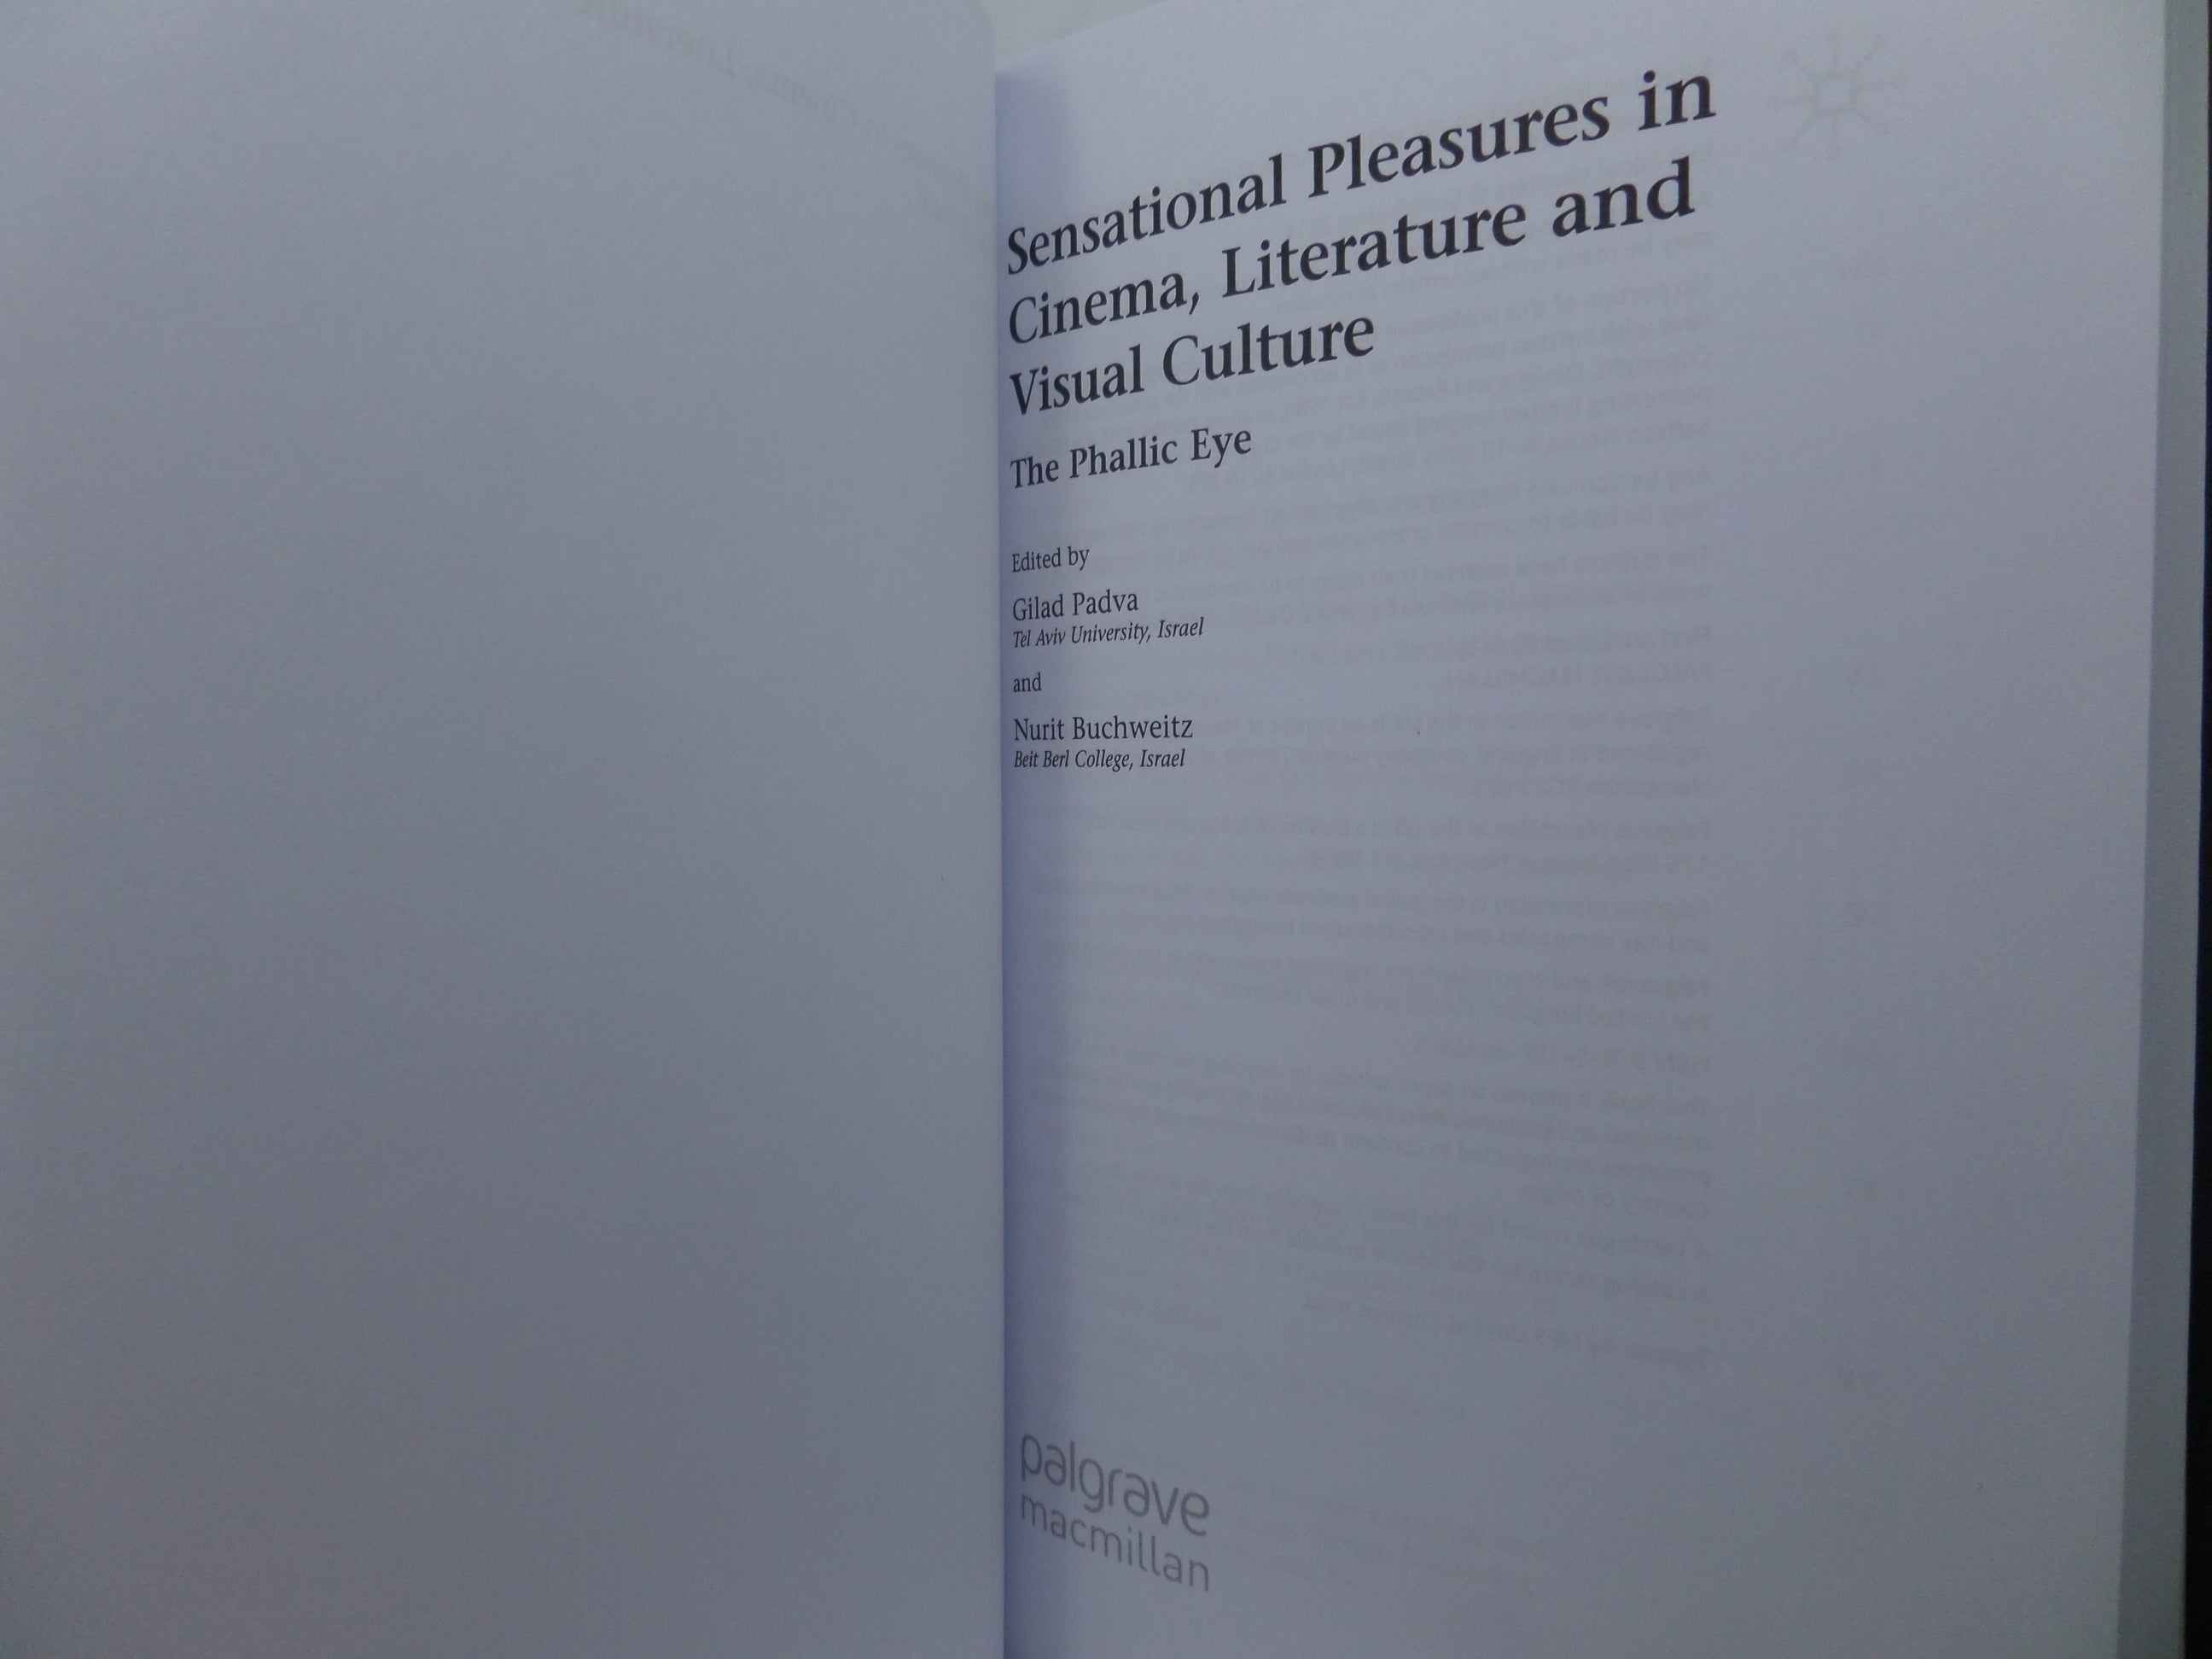 SENSATIONAL PLEASURES IN CINEMA, LITERATURE AND VISUAL CULTURE: THE PHALLIC EYE